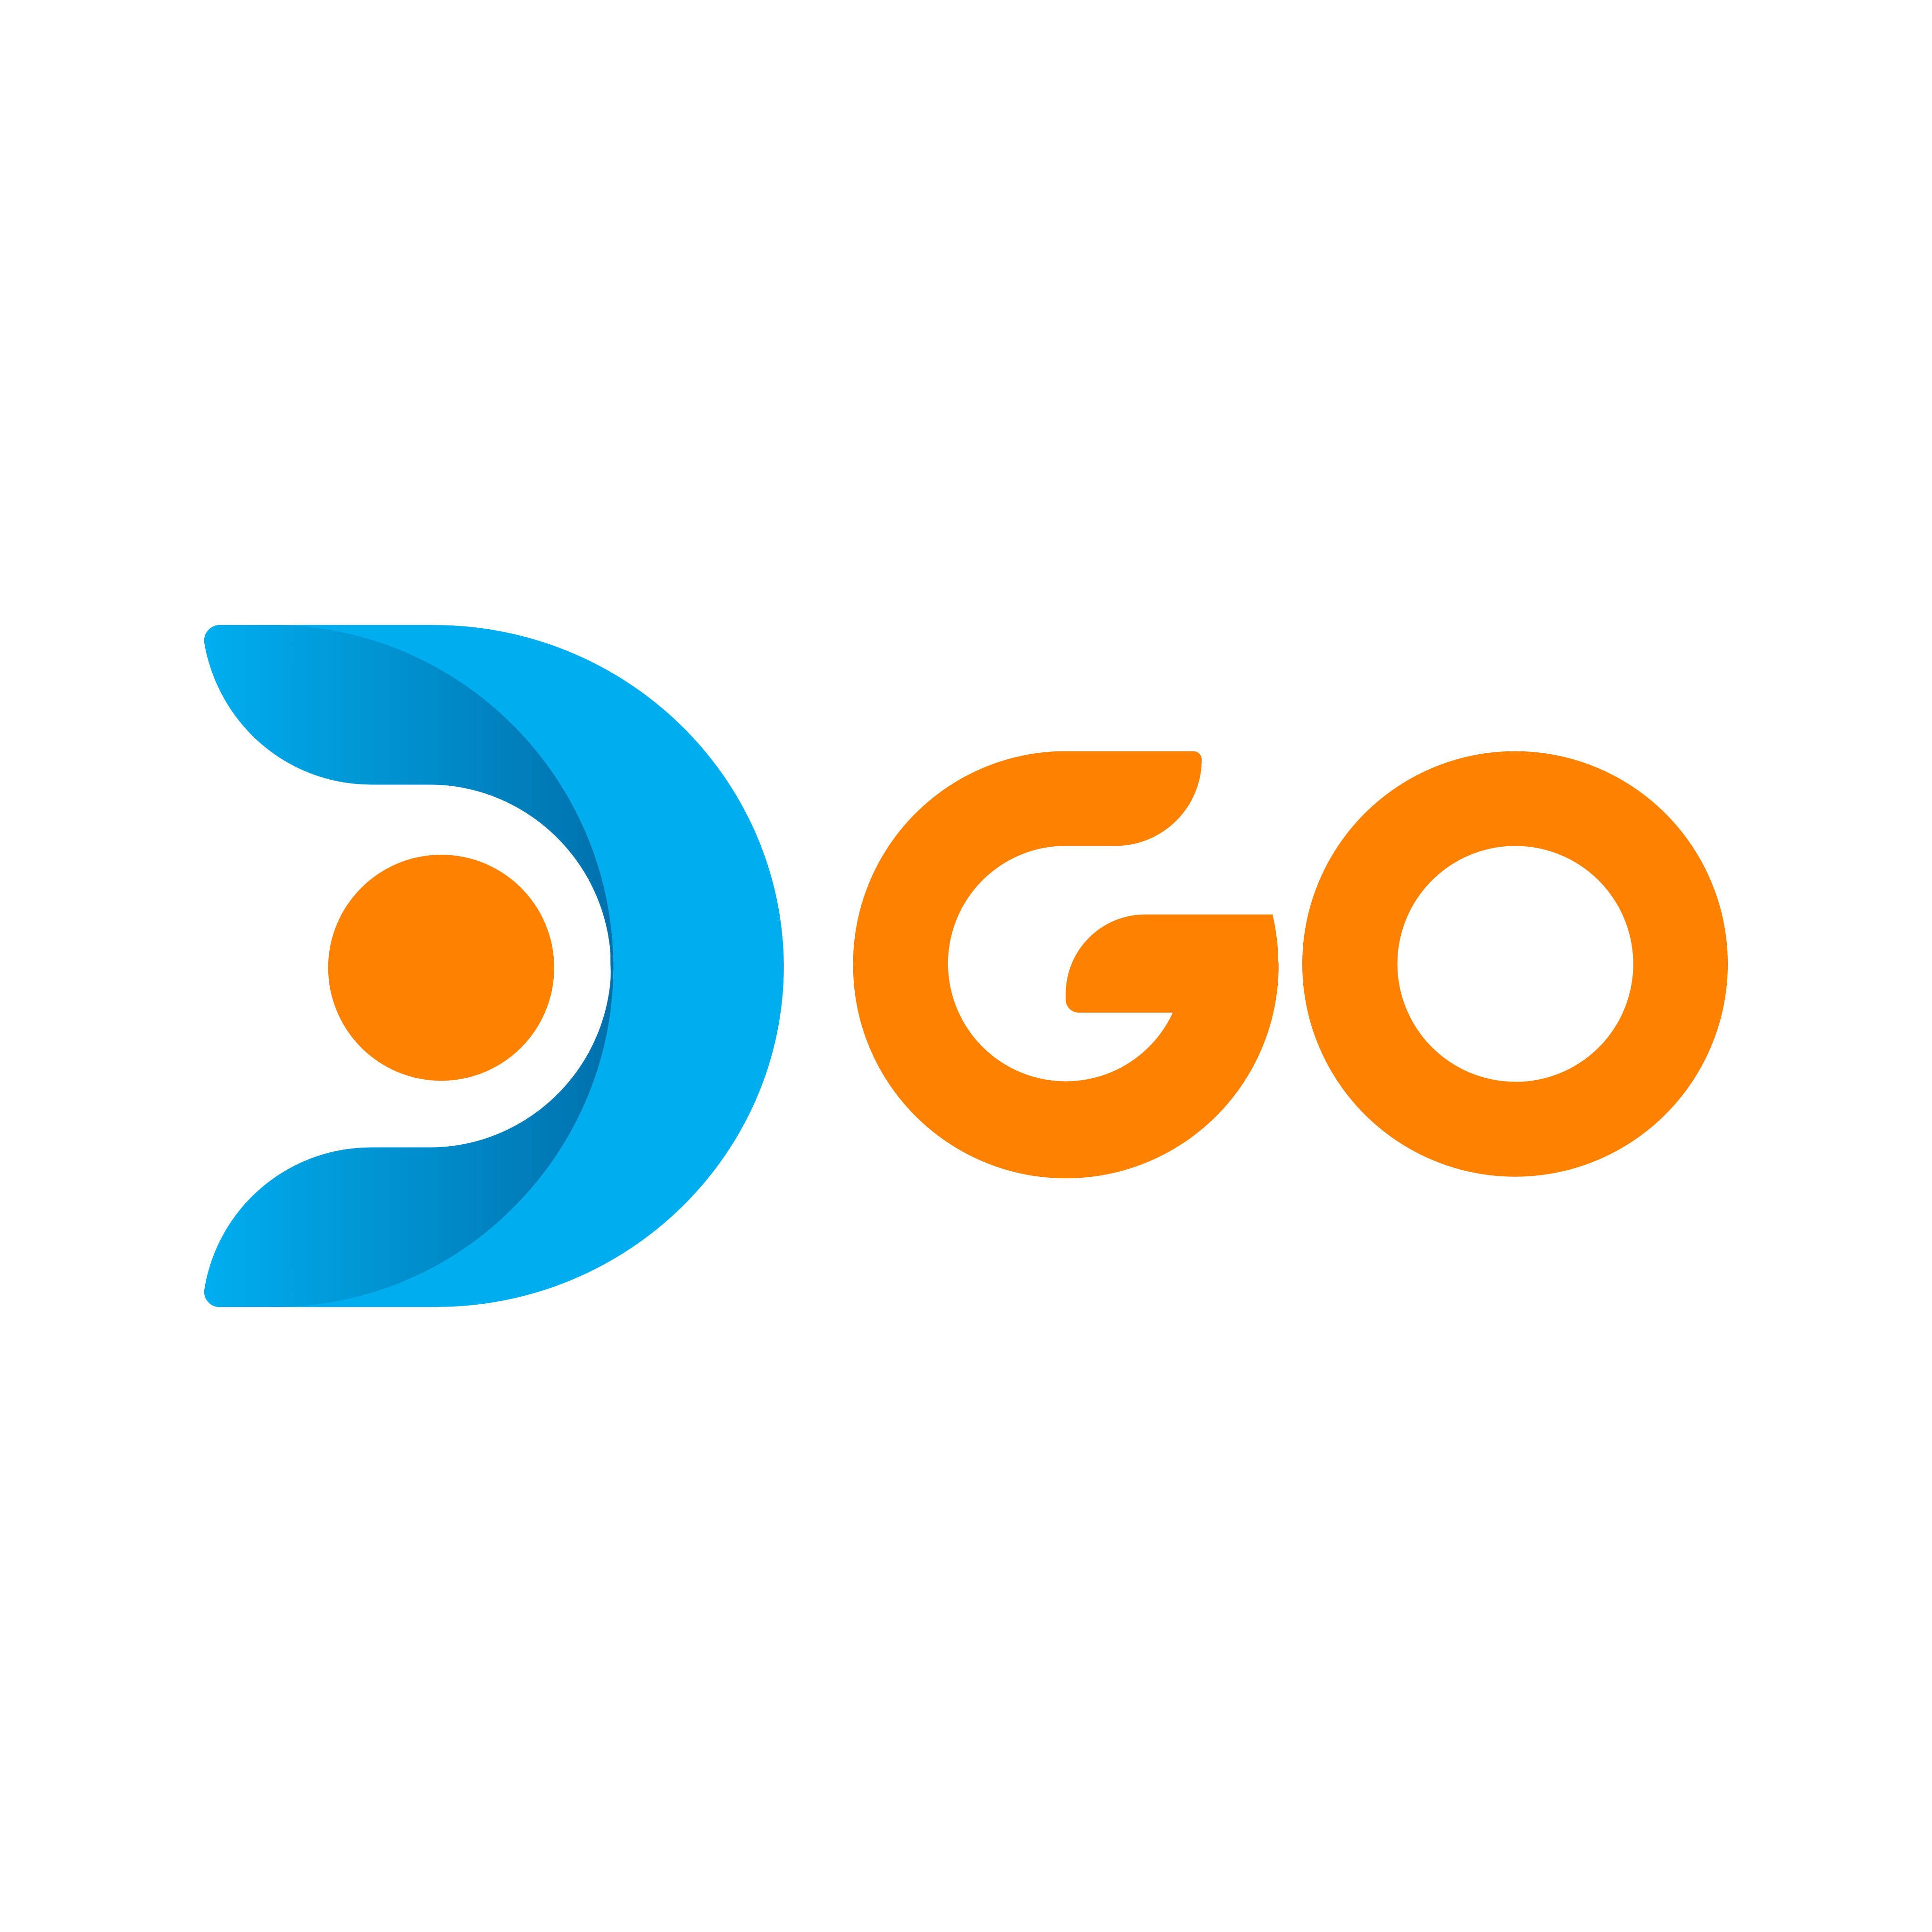 DGO Logo PNG.